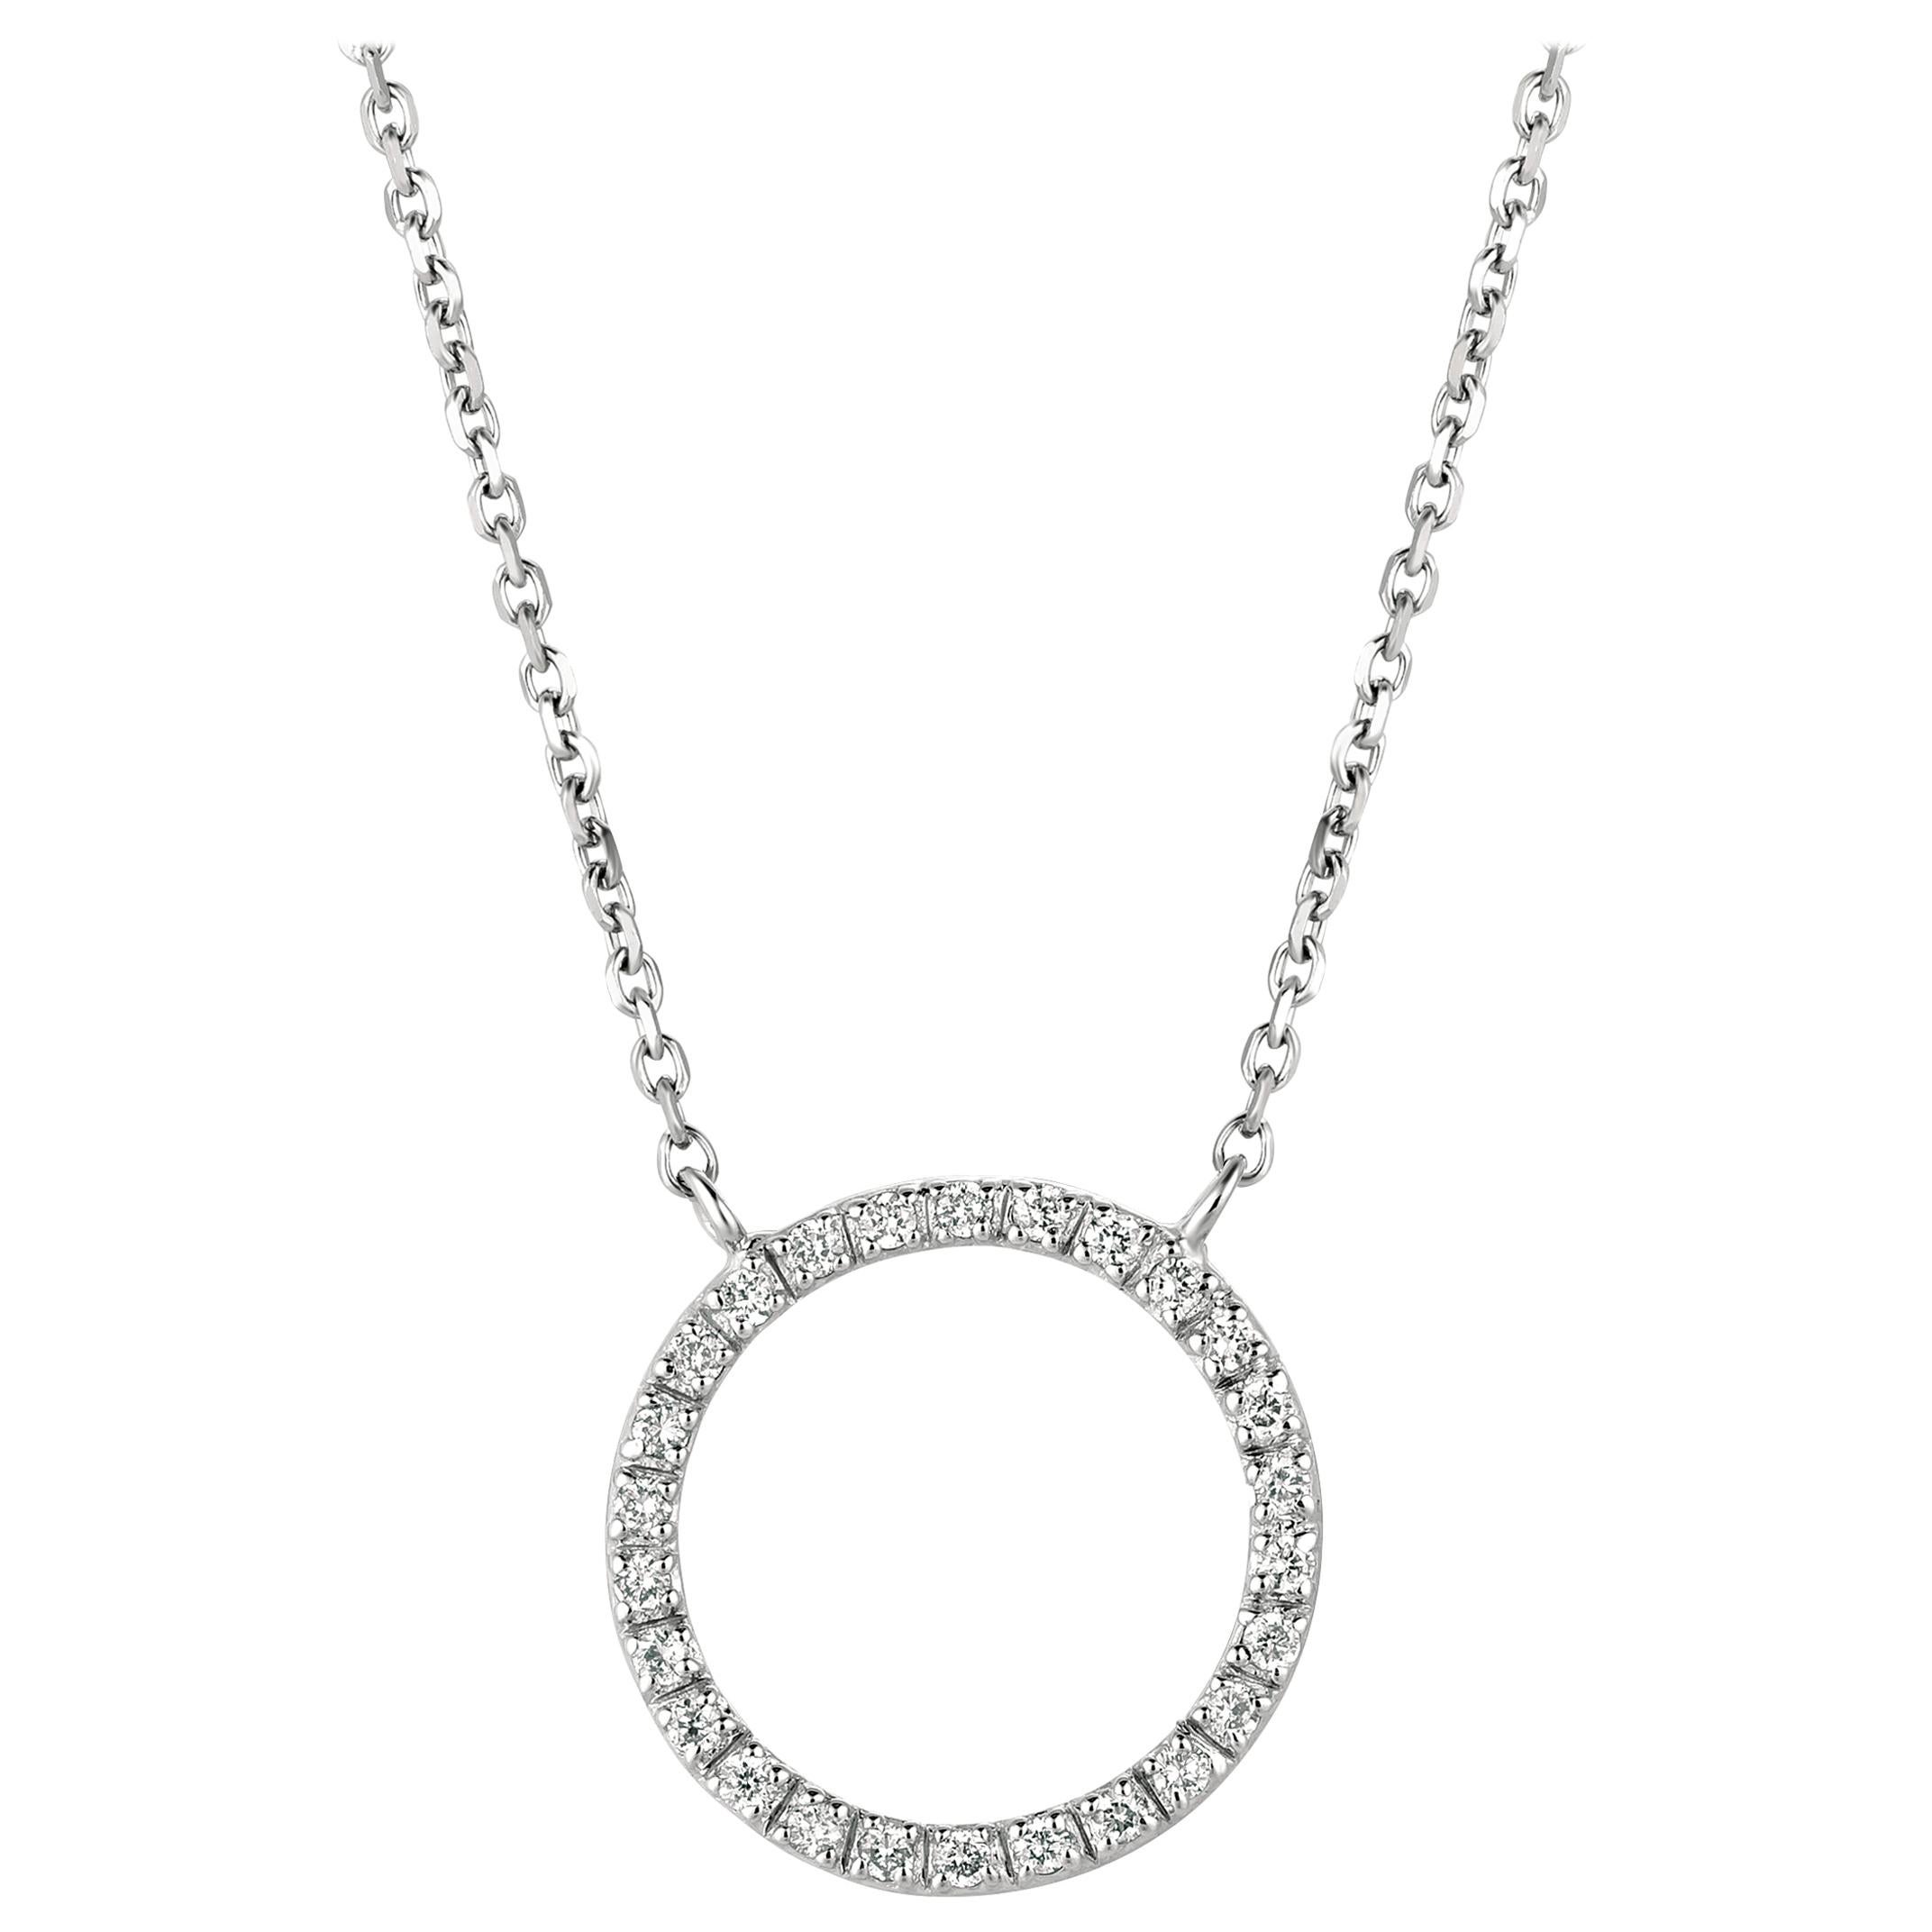 Collier circulaire en or blanc 14 carats avec diamants naturels de 0,25 carat G SI